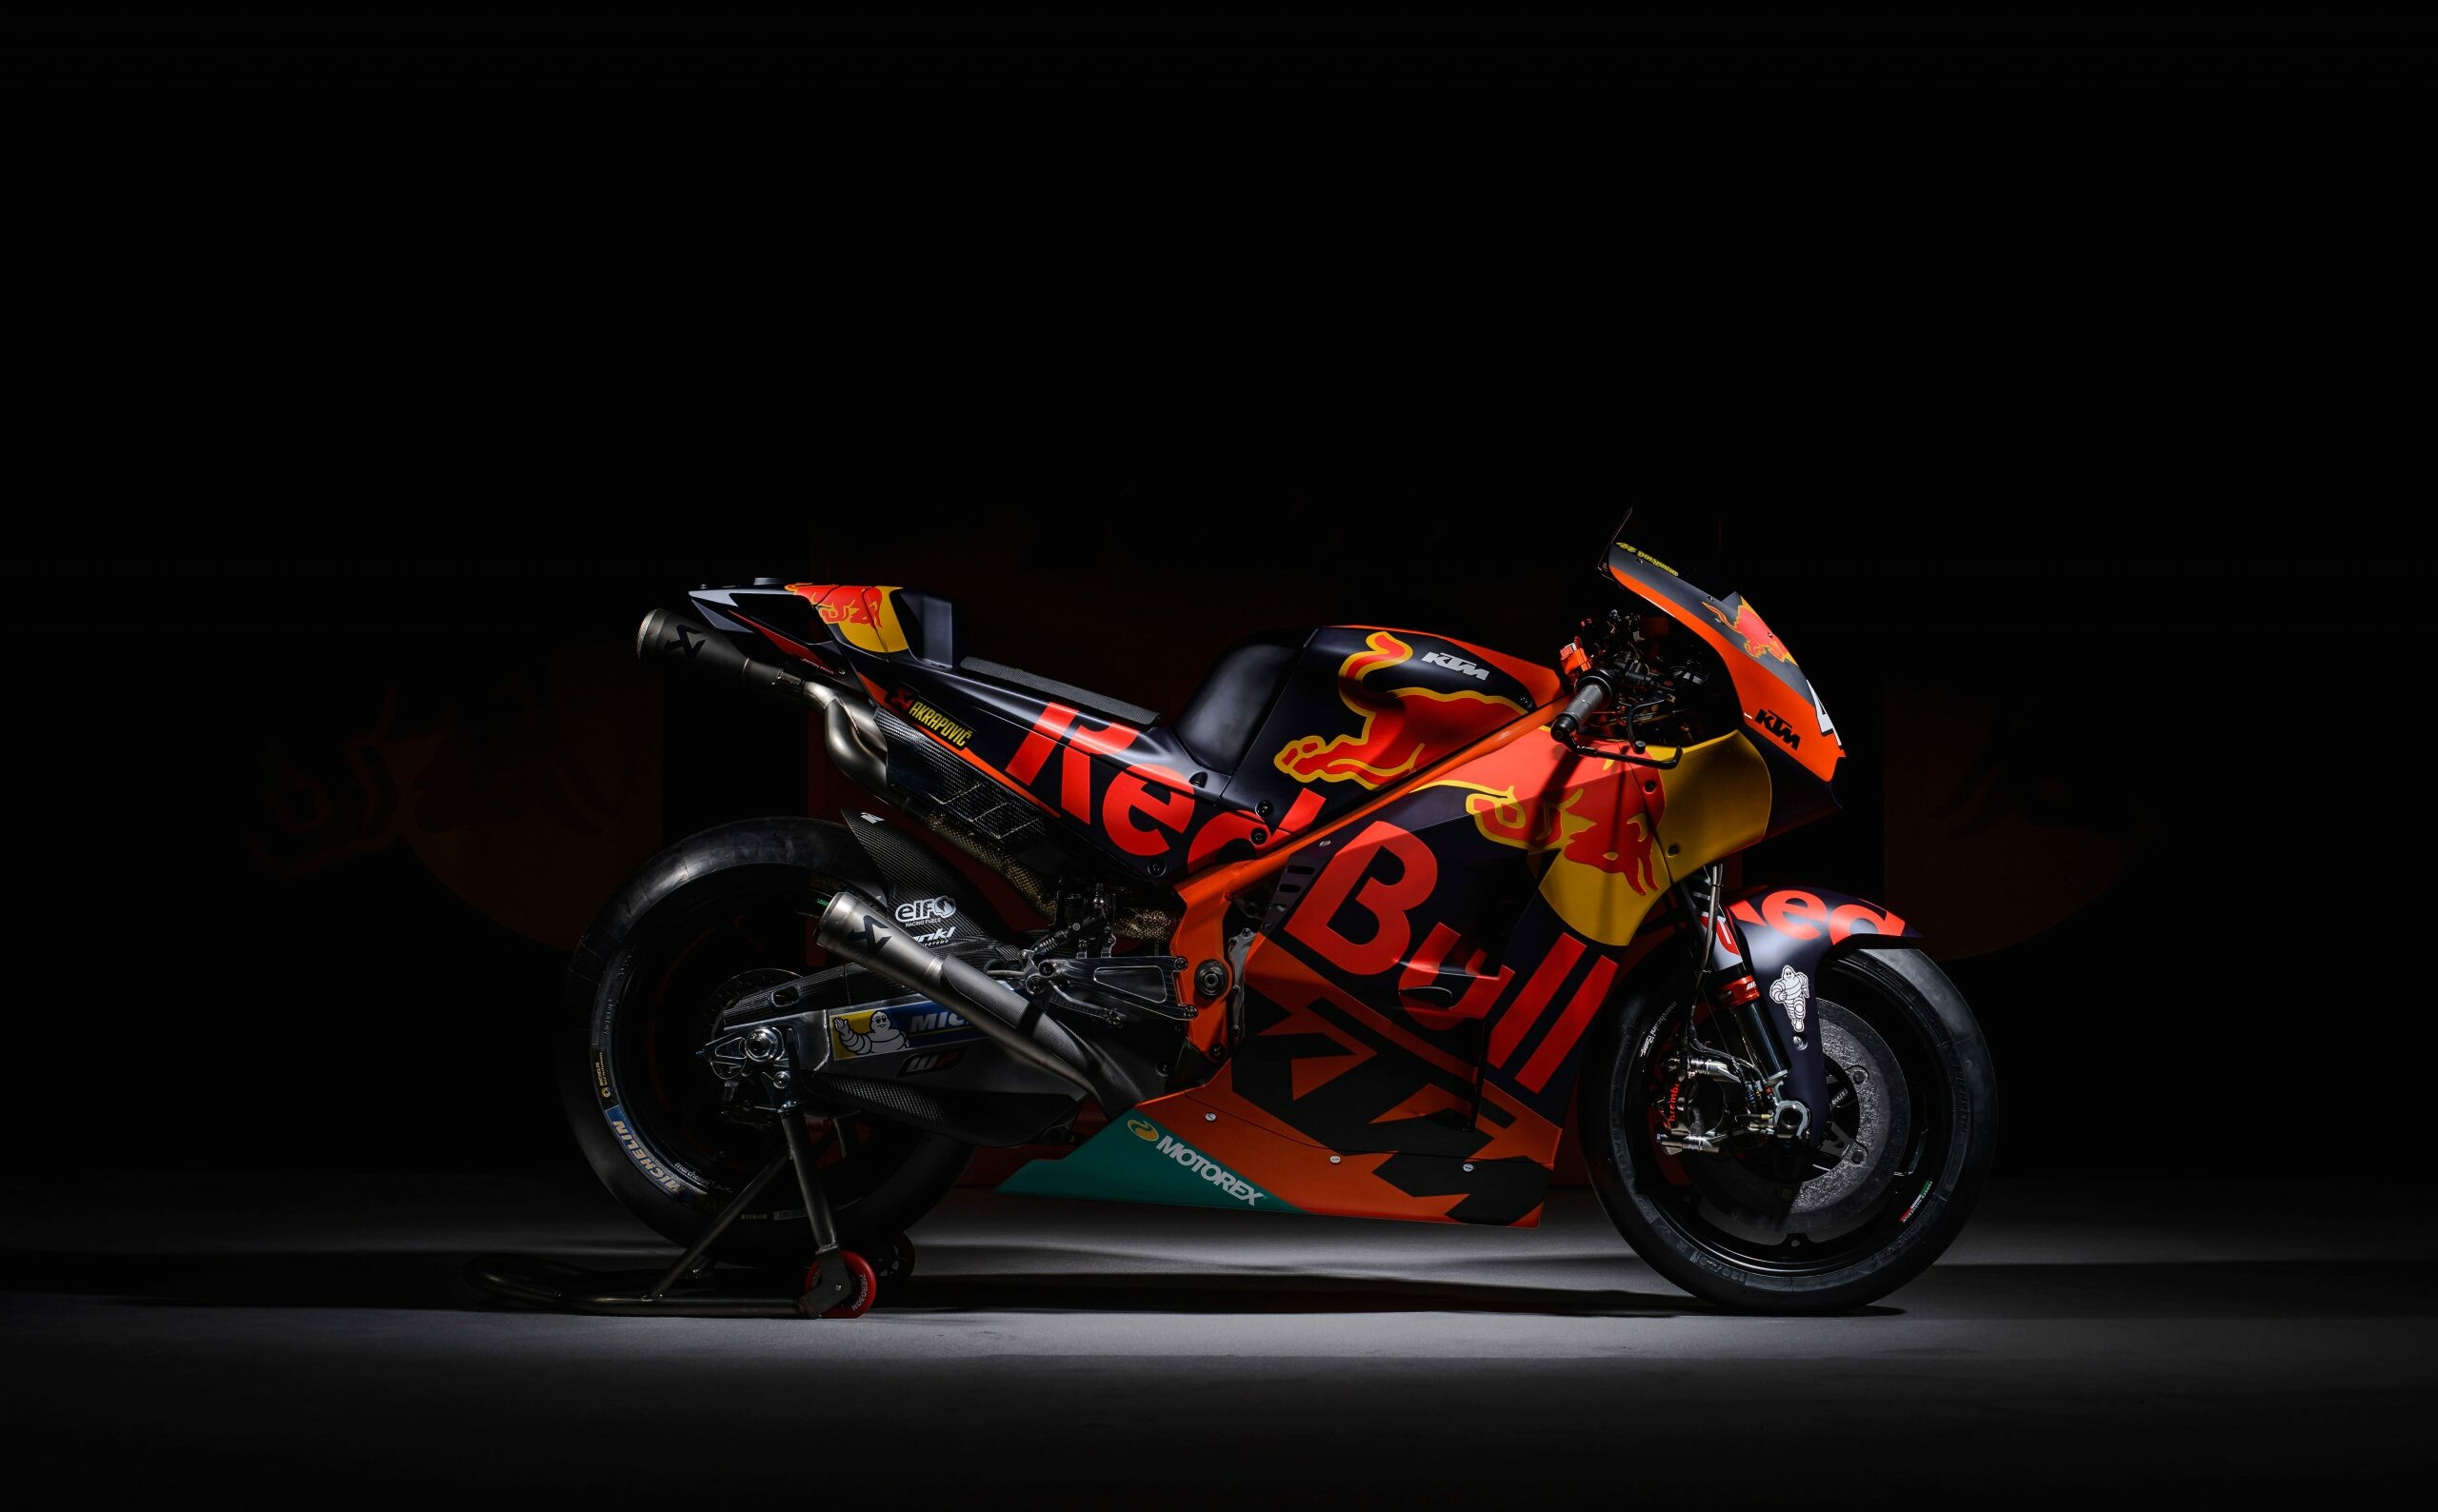 Bike: KTM Red Bull, MotoGP, Motorbike, Motorcycle, GranPrix Race, Racing. 2560x1590 HD Wallpaper.